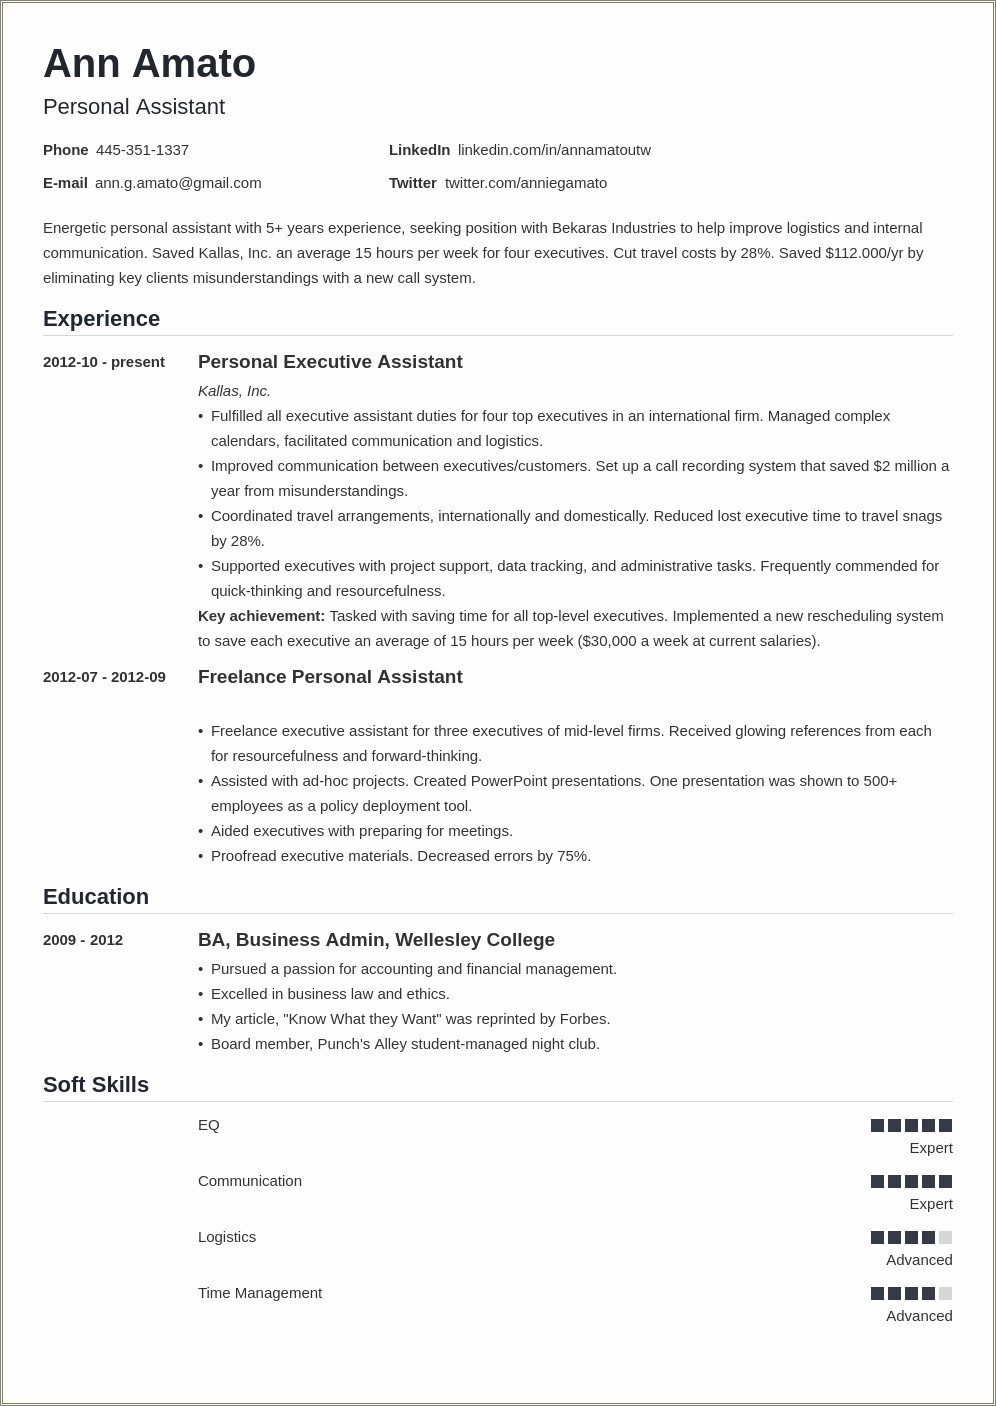 Financail Aid Work Resume Job Description